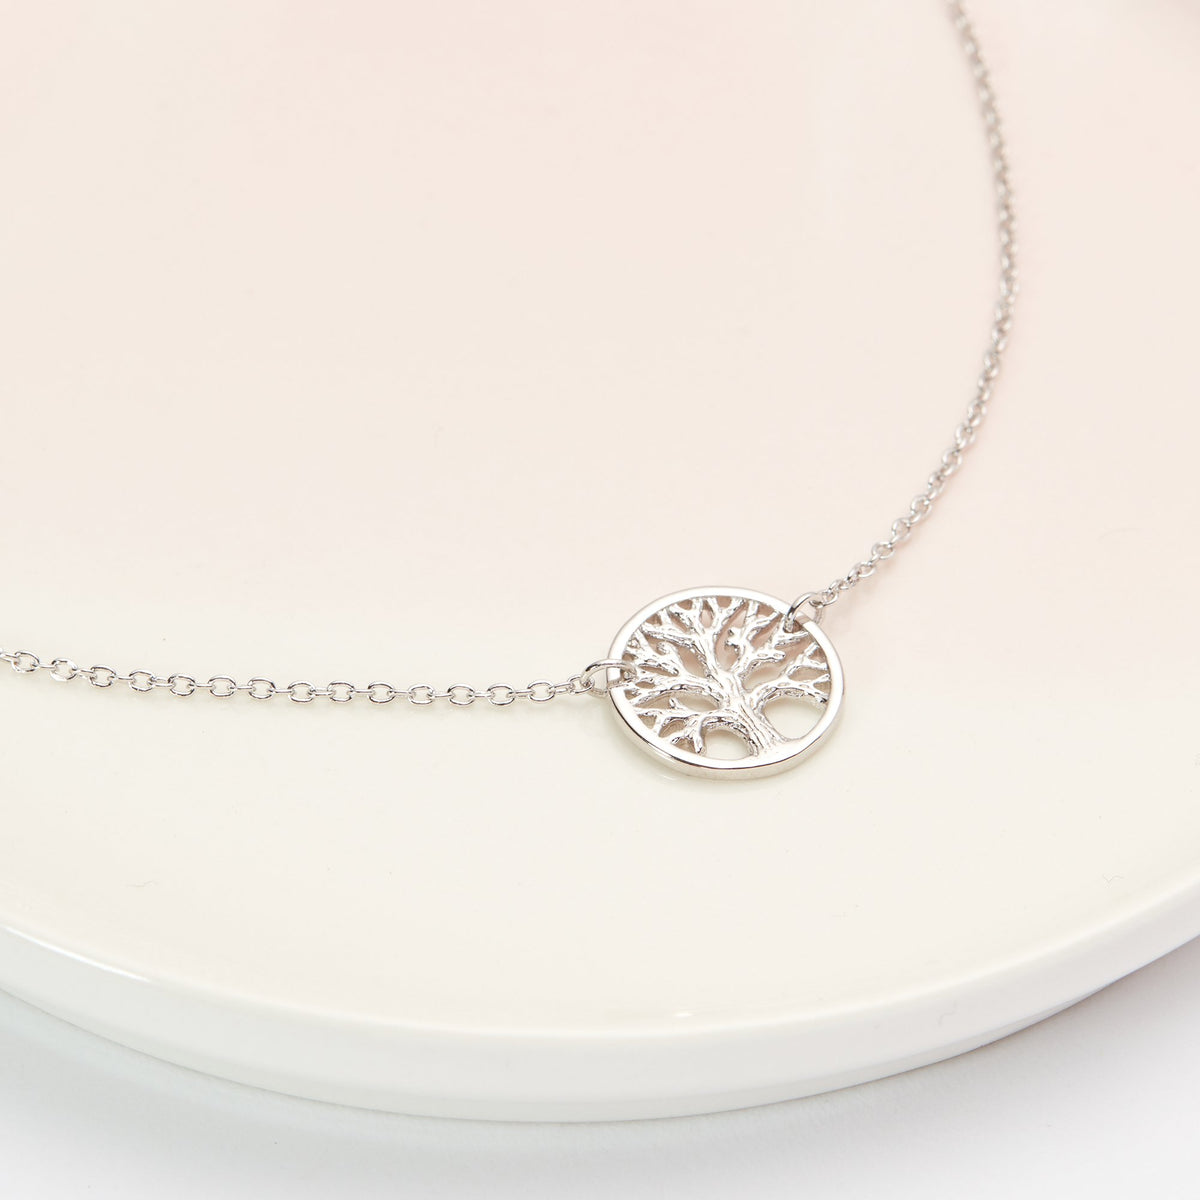 Generations Necklace - Dear Ava, Jewelry / Necklaces / Pendants